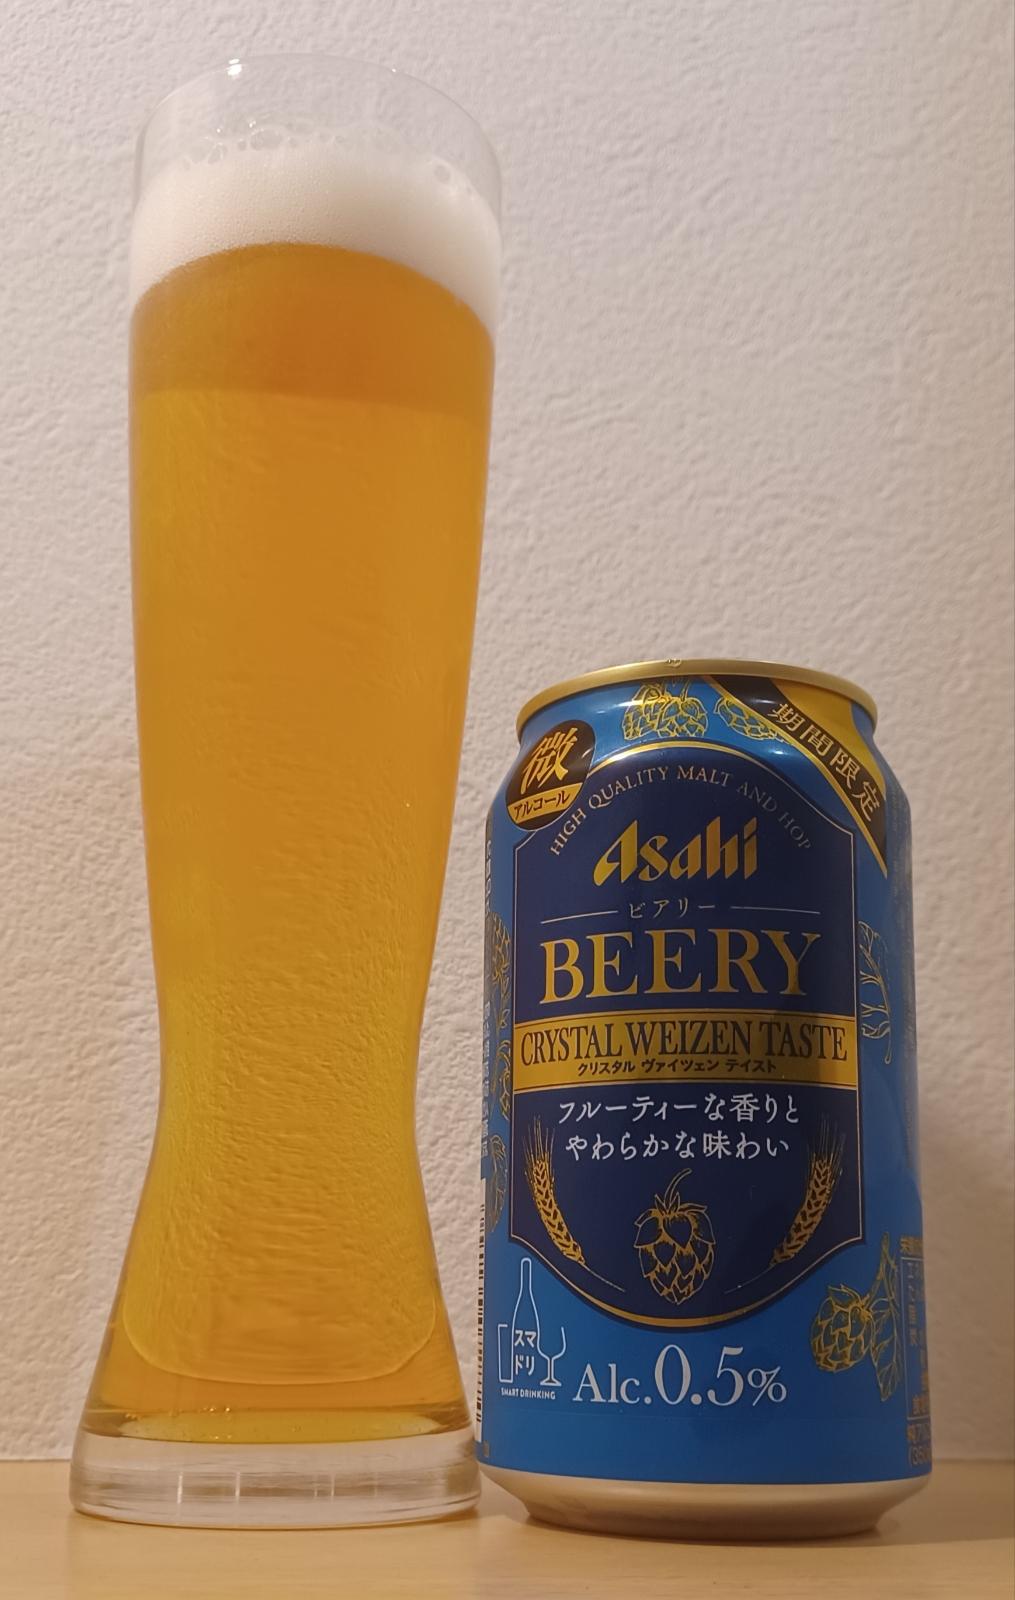 Asahi Beery - Crystal Weizen Taste